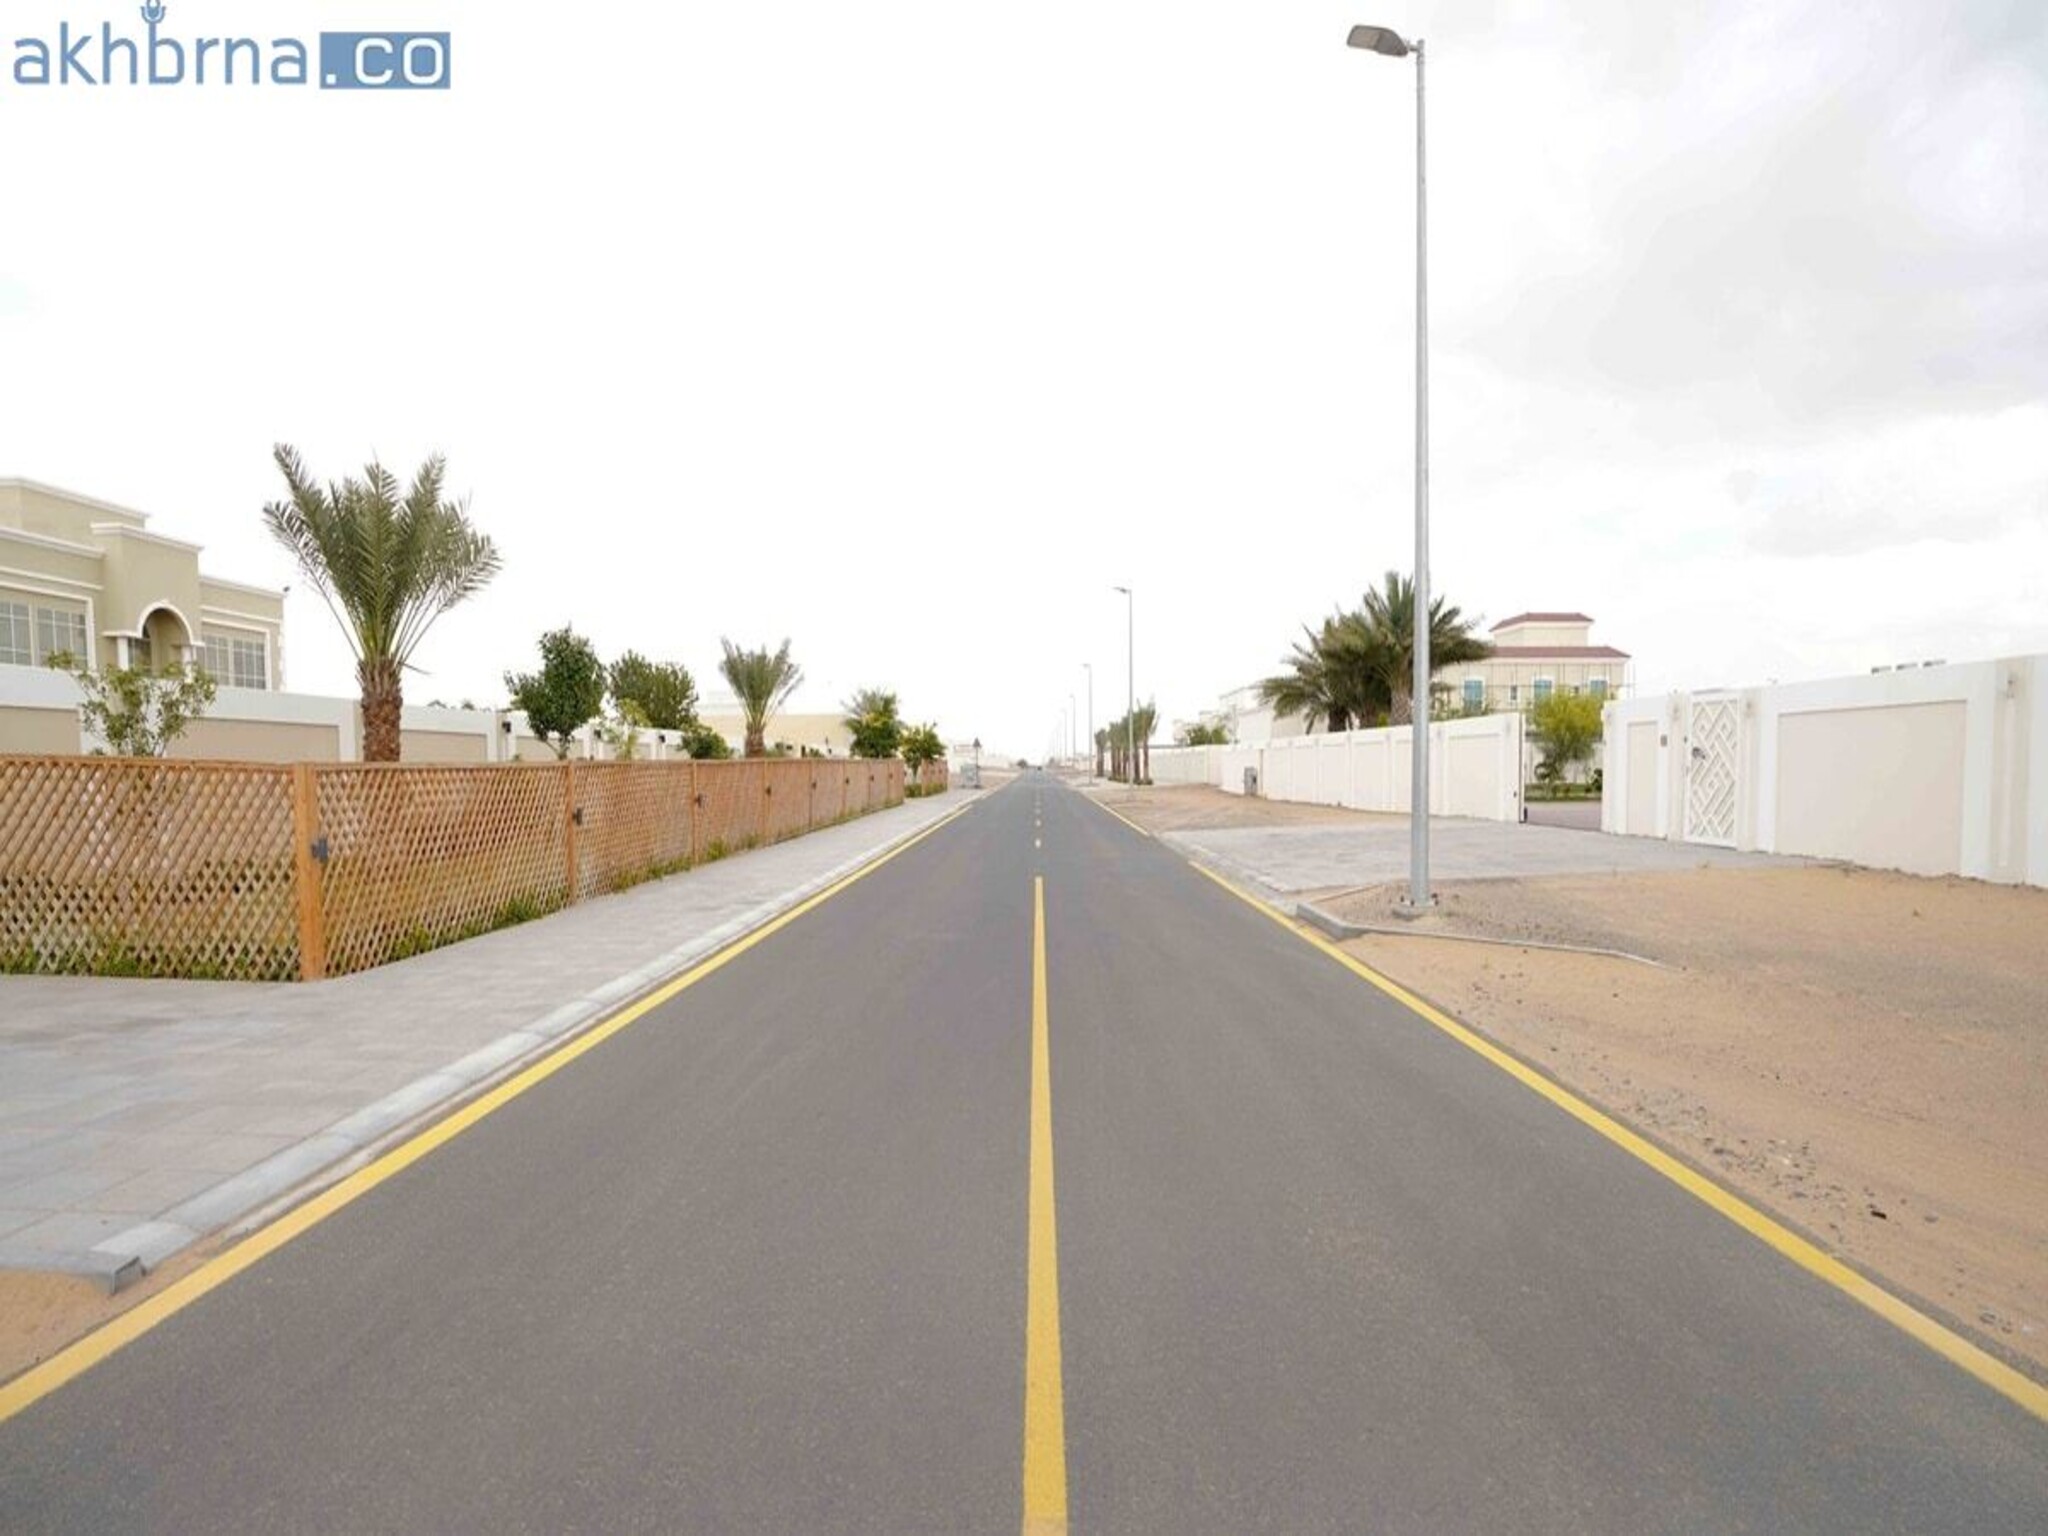 UAE Announces Completion of Key Road Upgrades Across Dubai